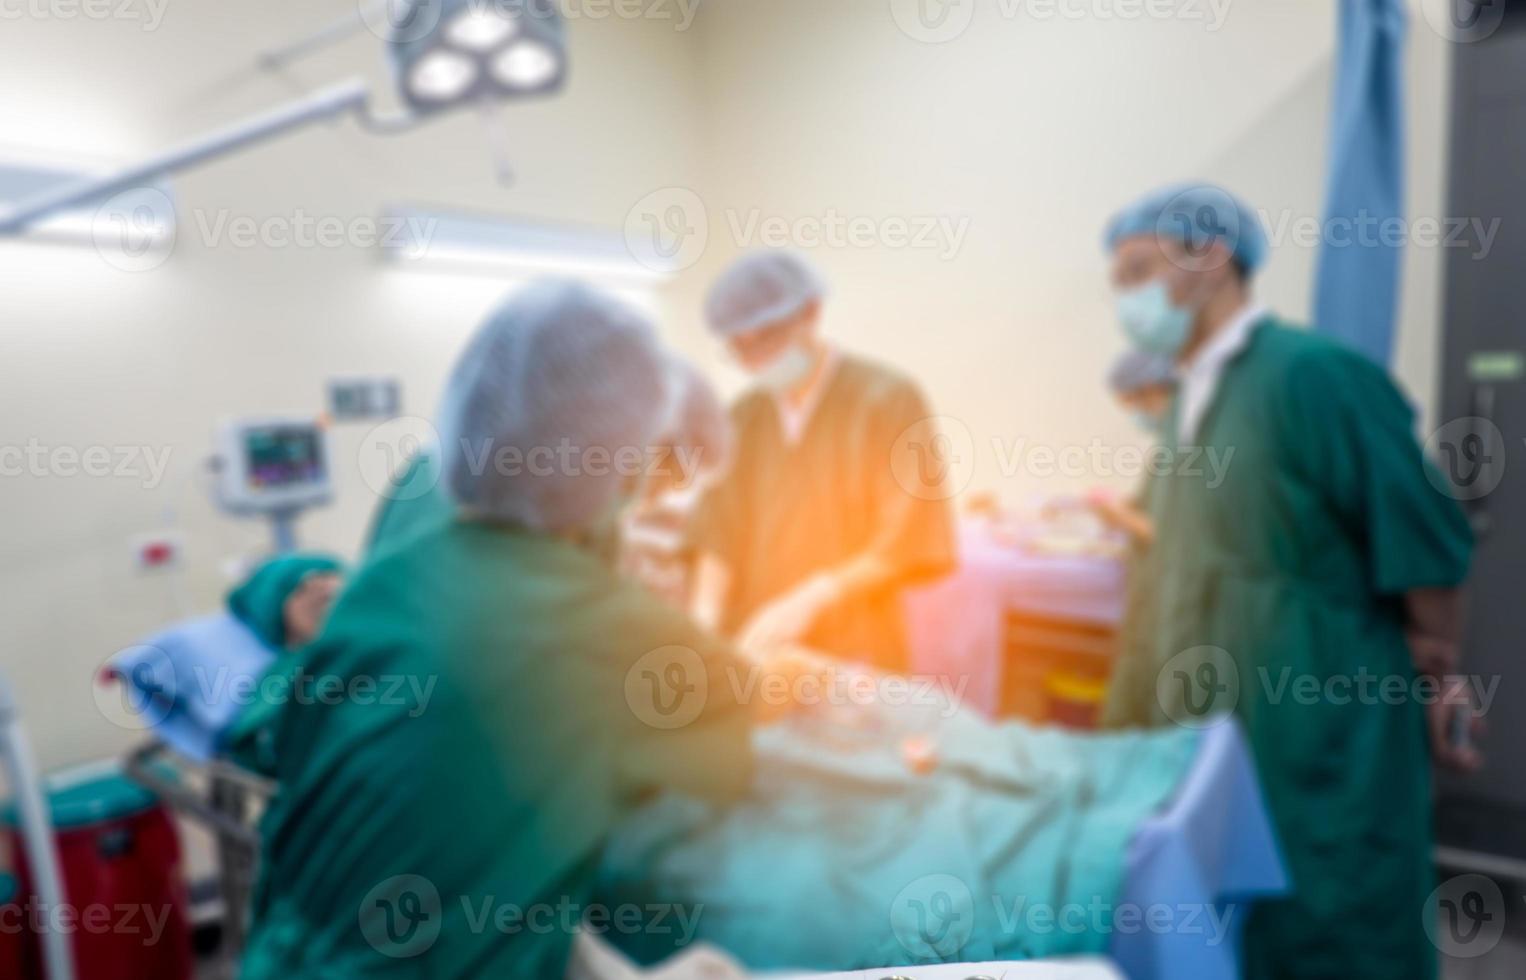 fondo borroso del quirófano moderno en el hospital con un grupo de cirujanos en quirófano con equipo quirúrgico. antecedentes médicos modernos foto